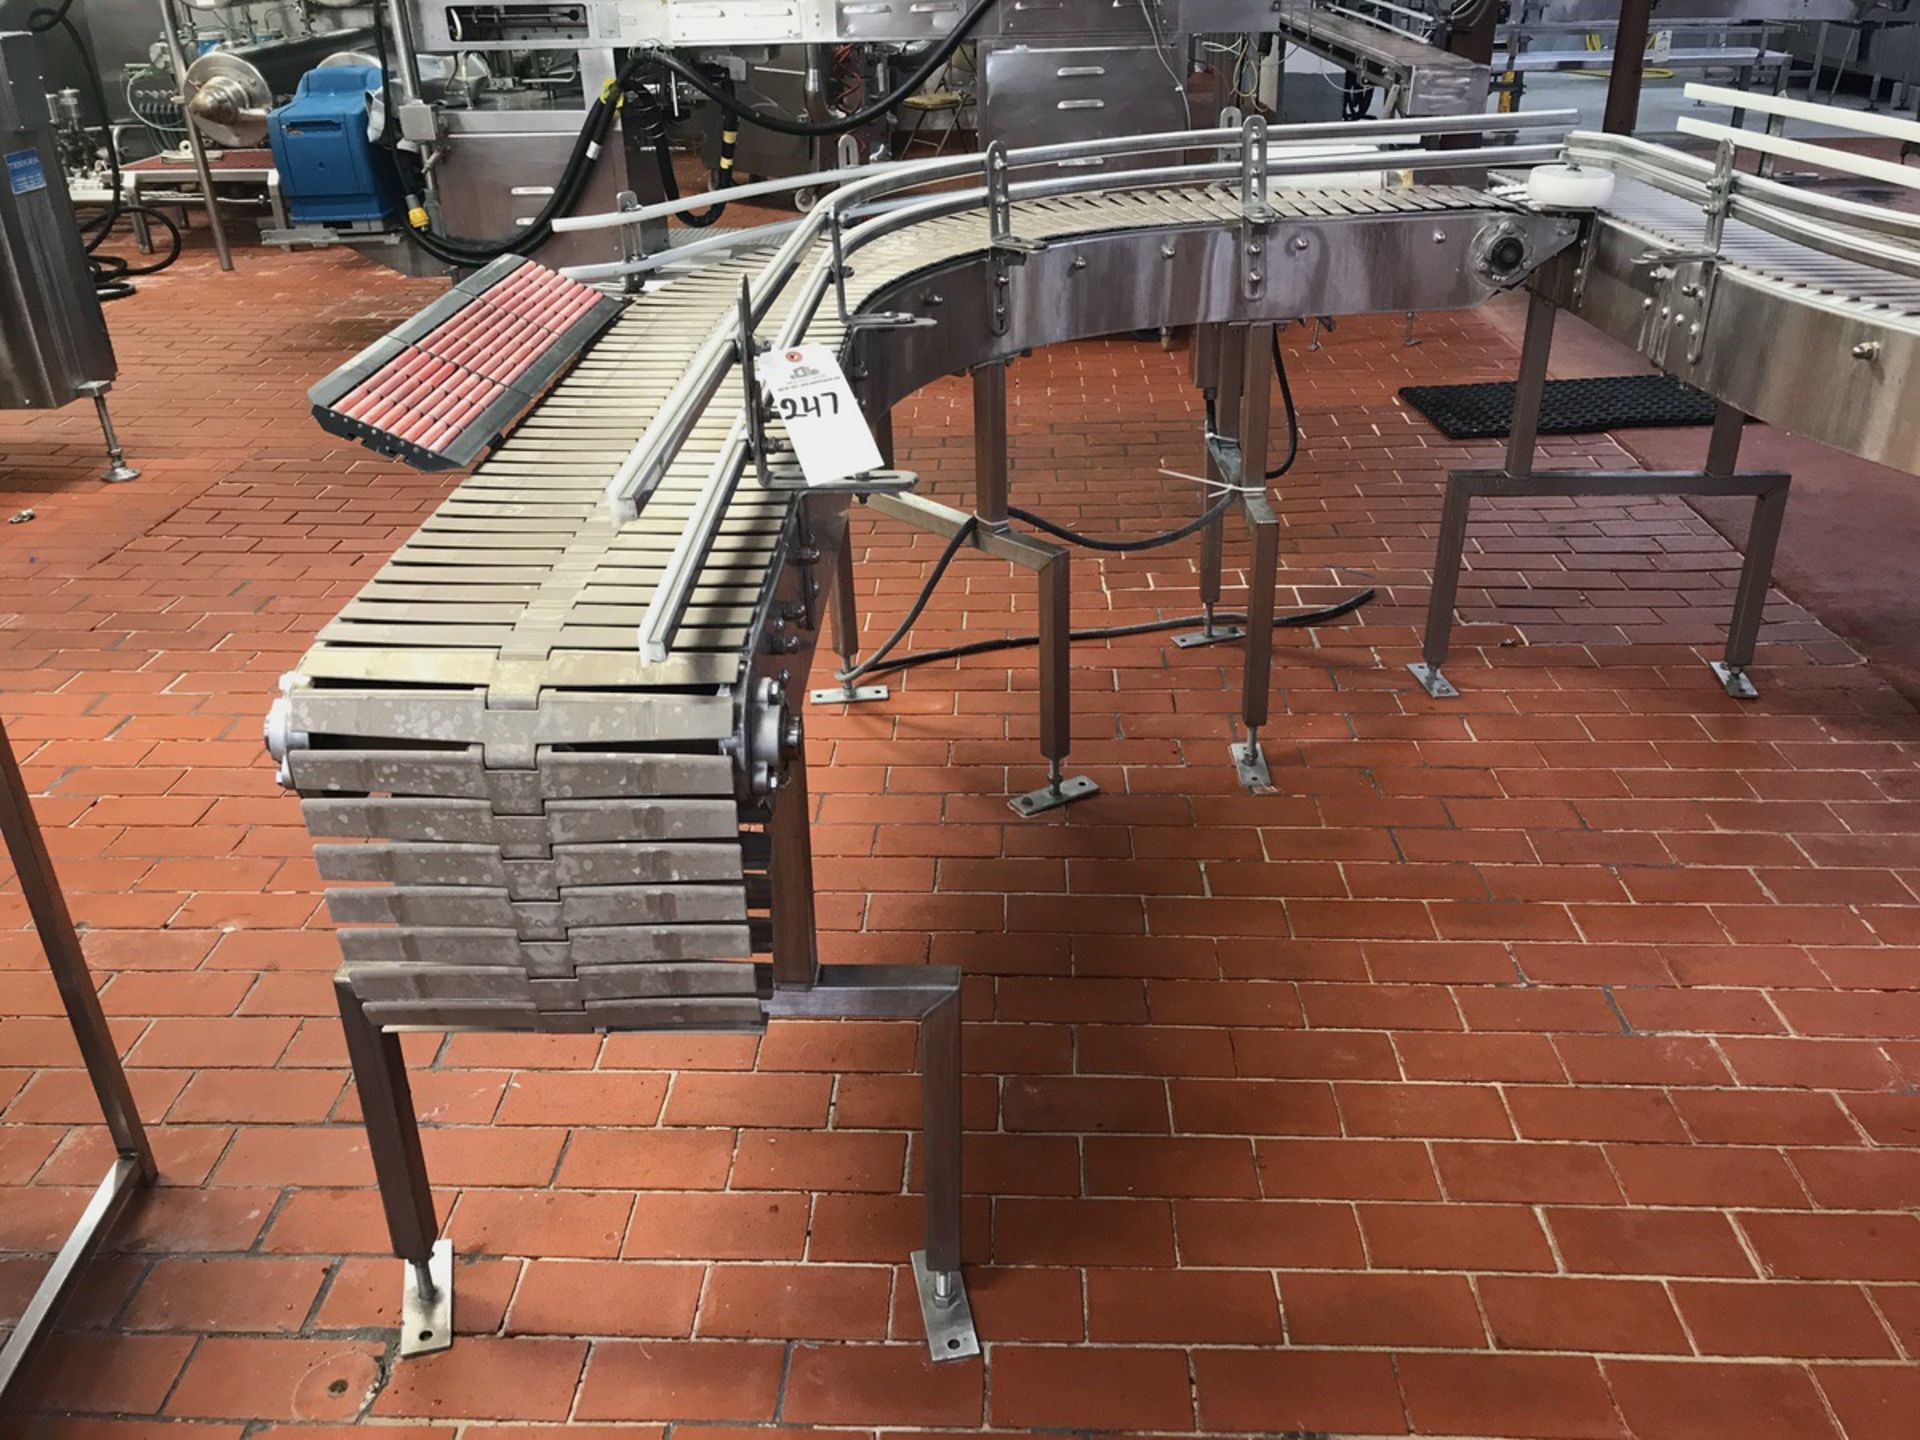 Stainless Steel Conveyor, 90 Deg Turn, Approx 12in Wide x 9ft Long | Rig Fee: $150